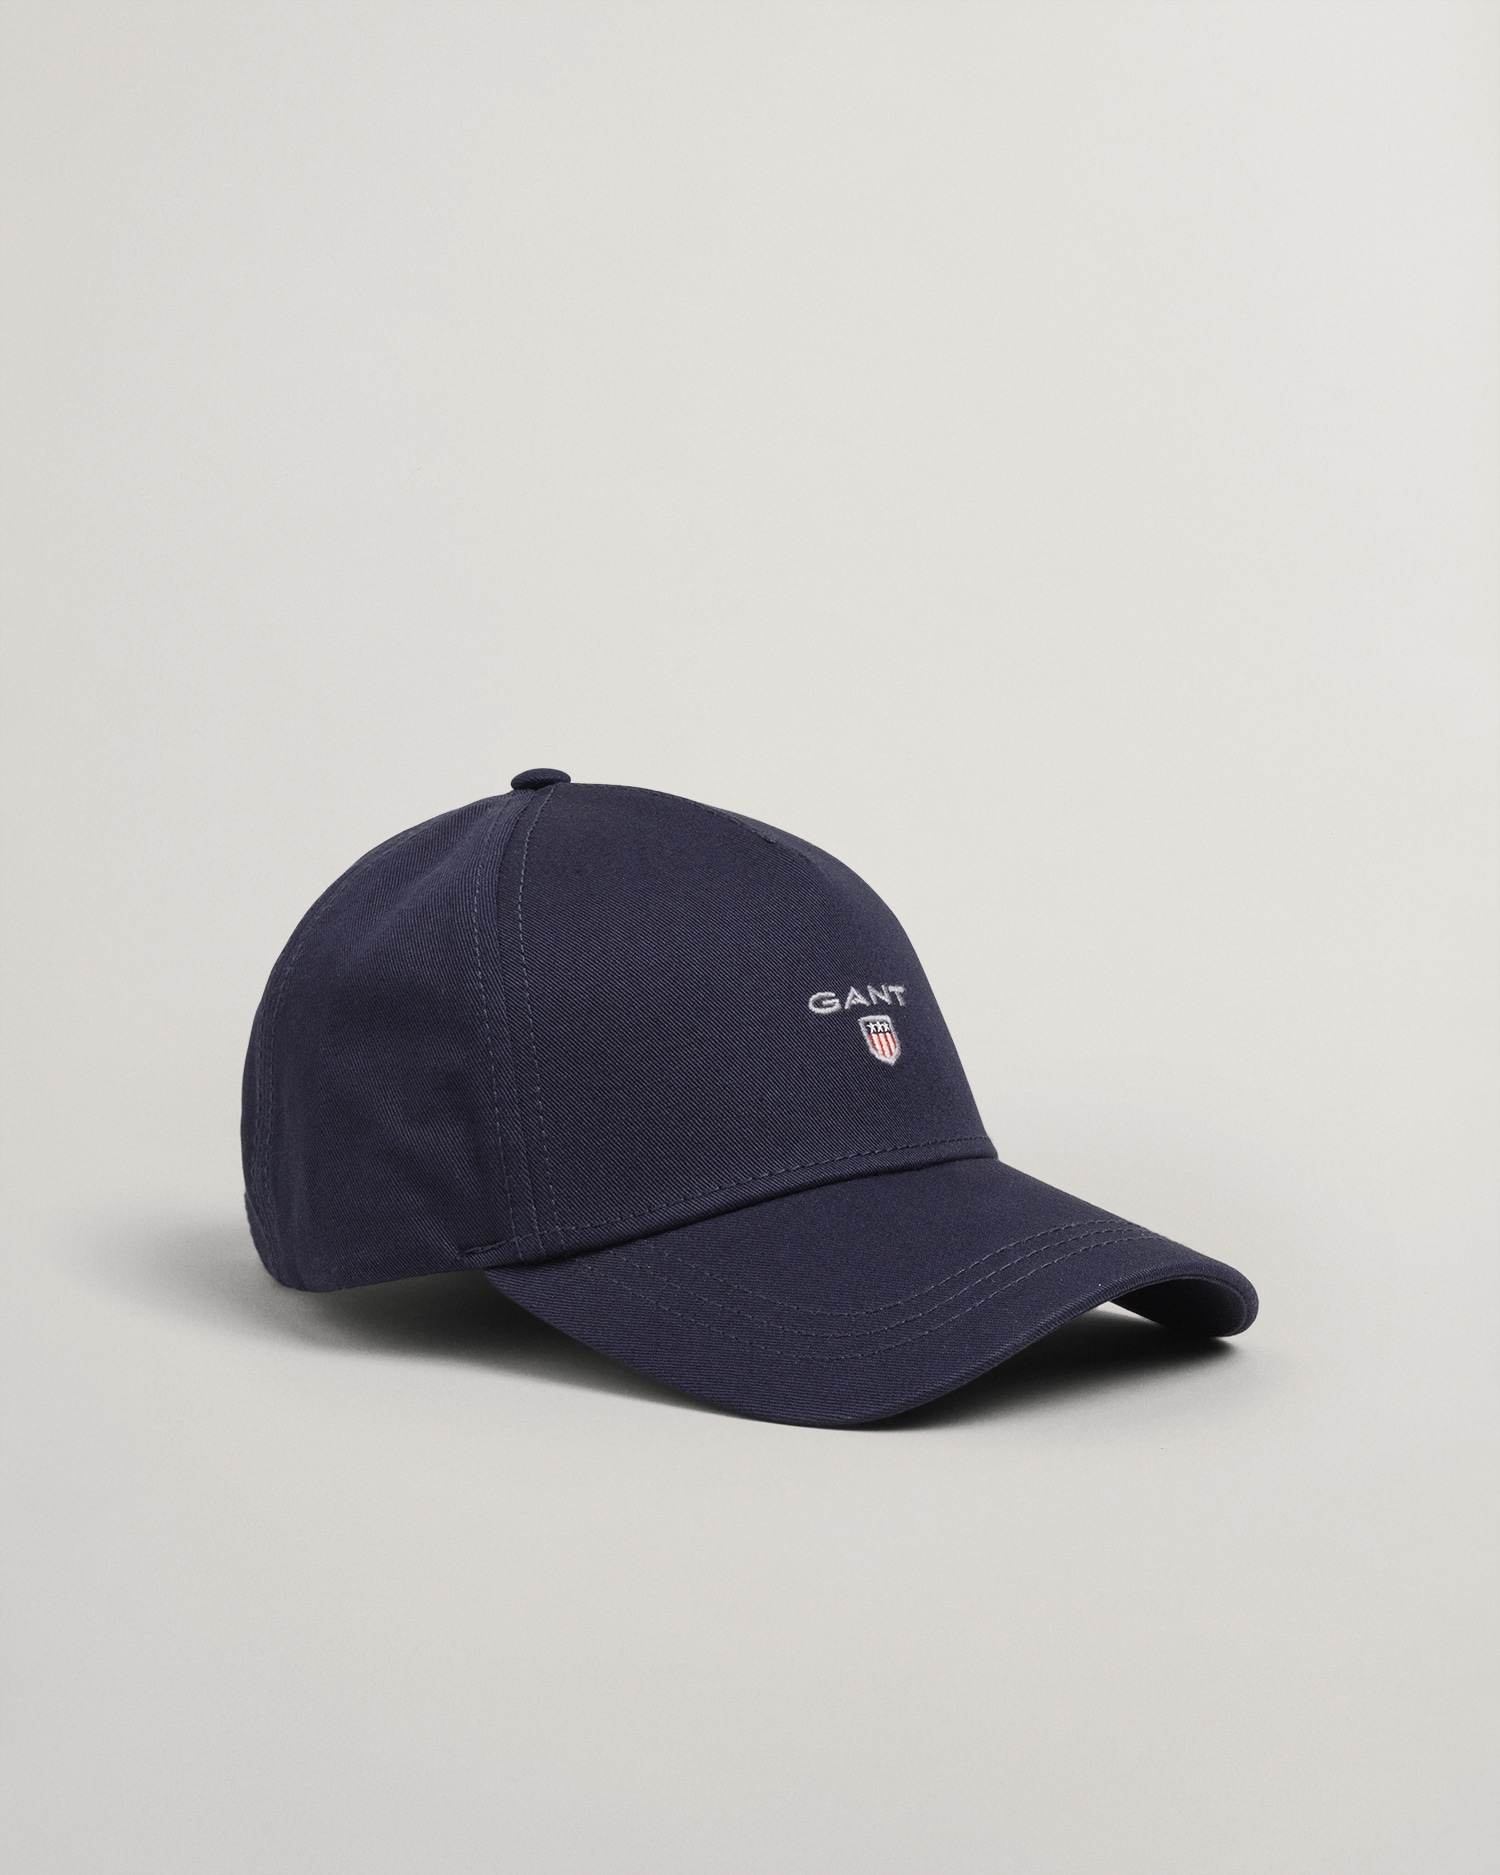 Gant navy boys cap with logo